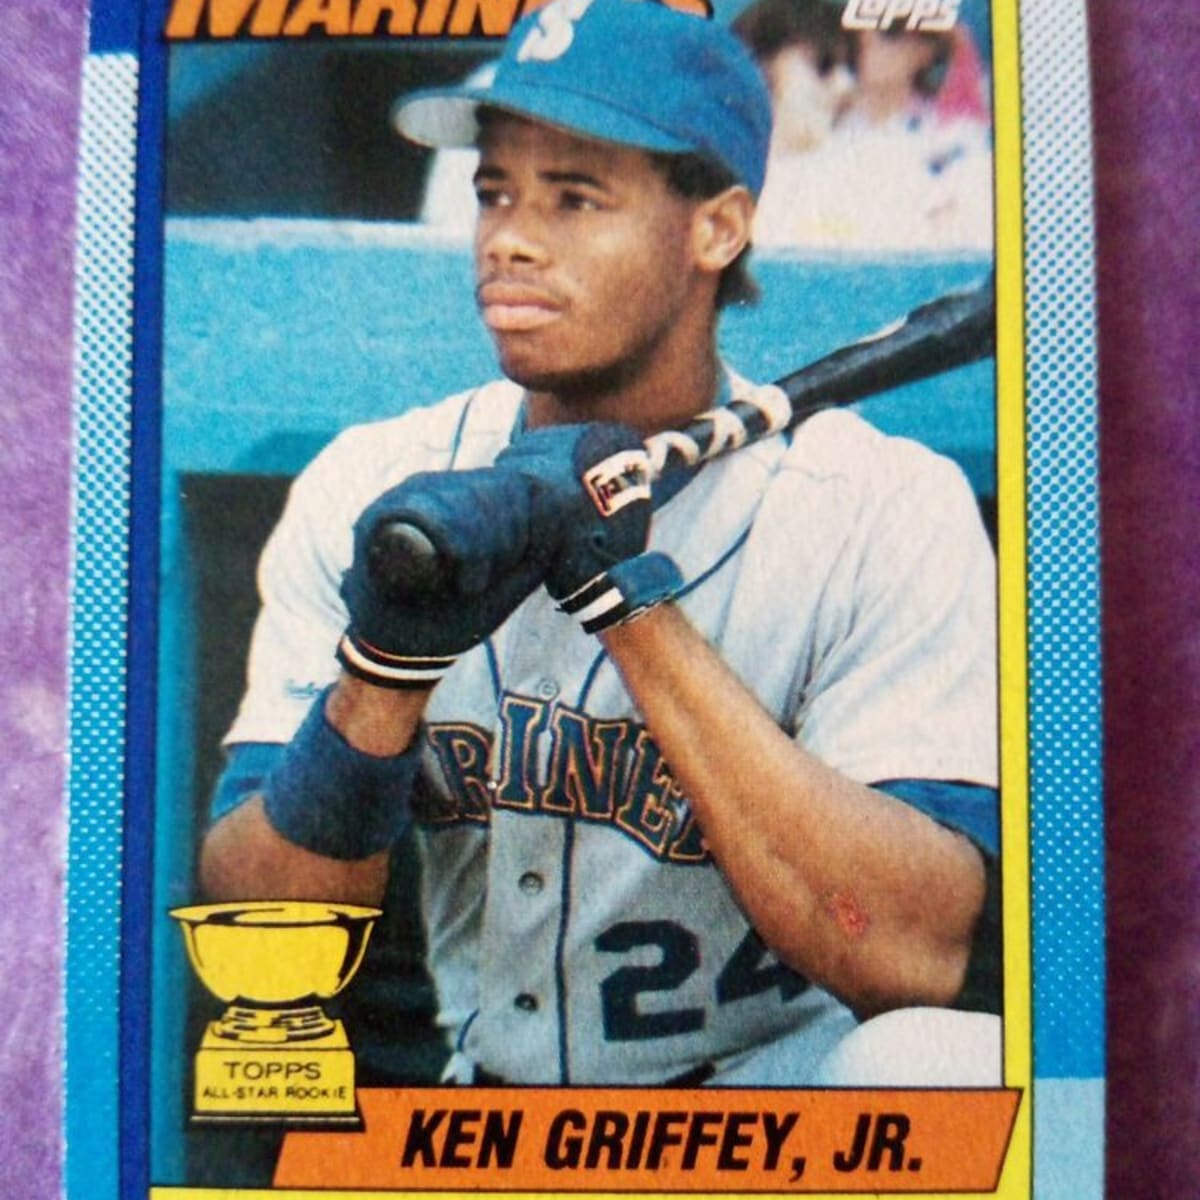 24 for No. 24: Ken Griffey Jr.'s most memorable moments